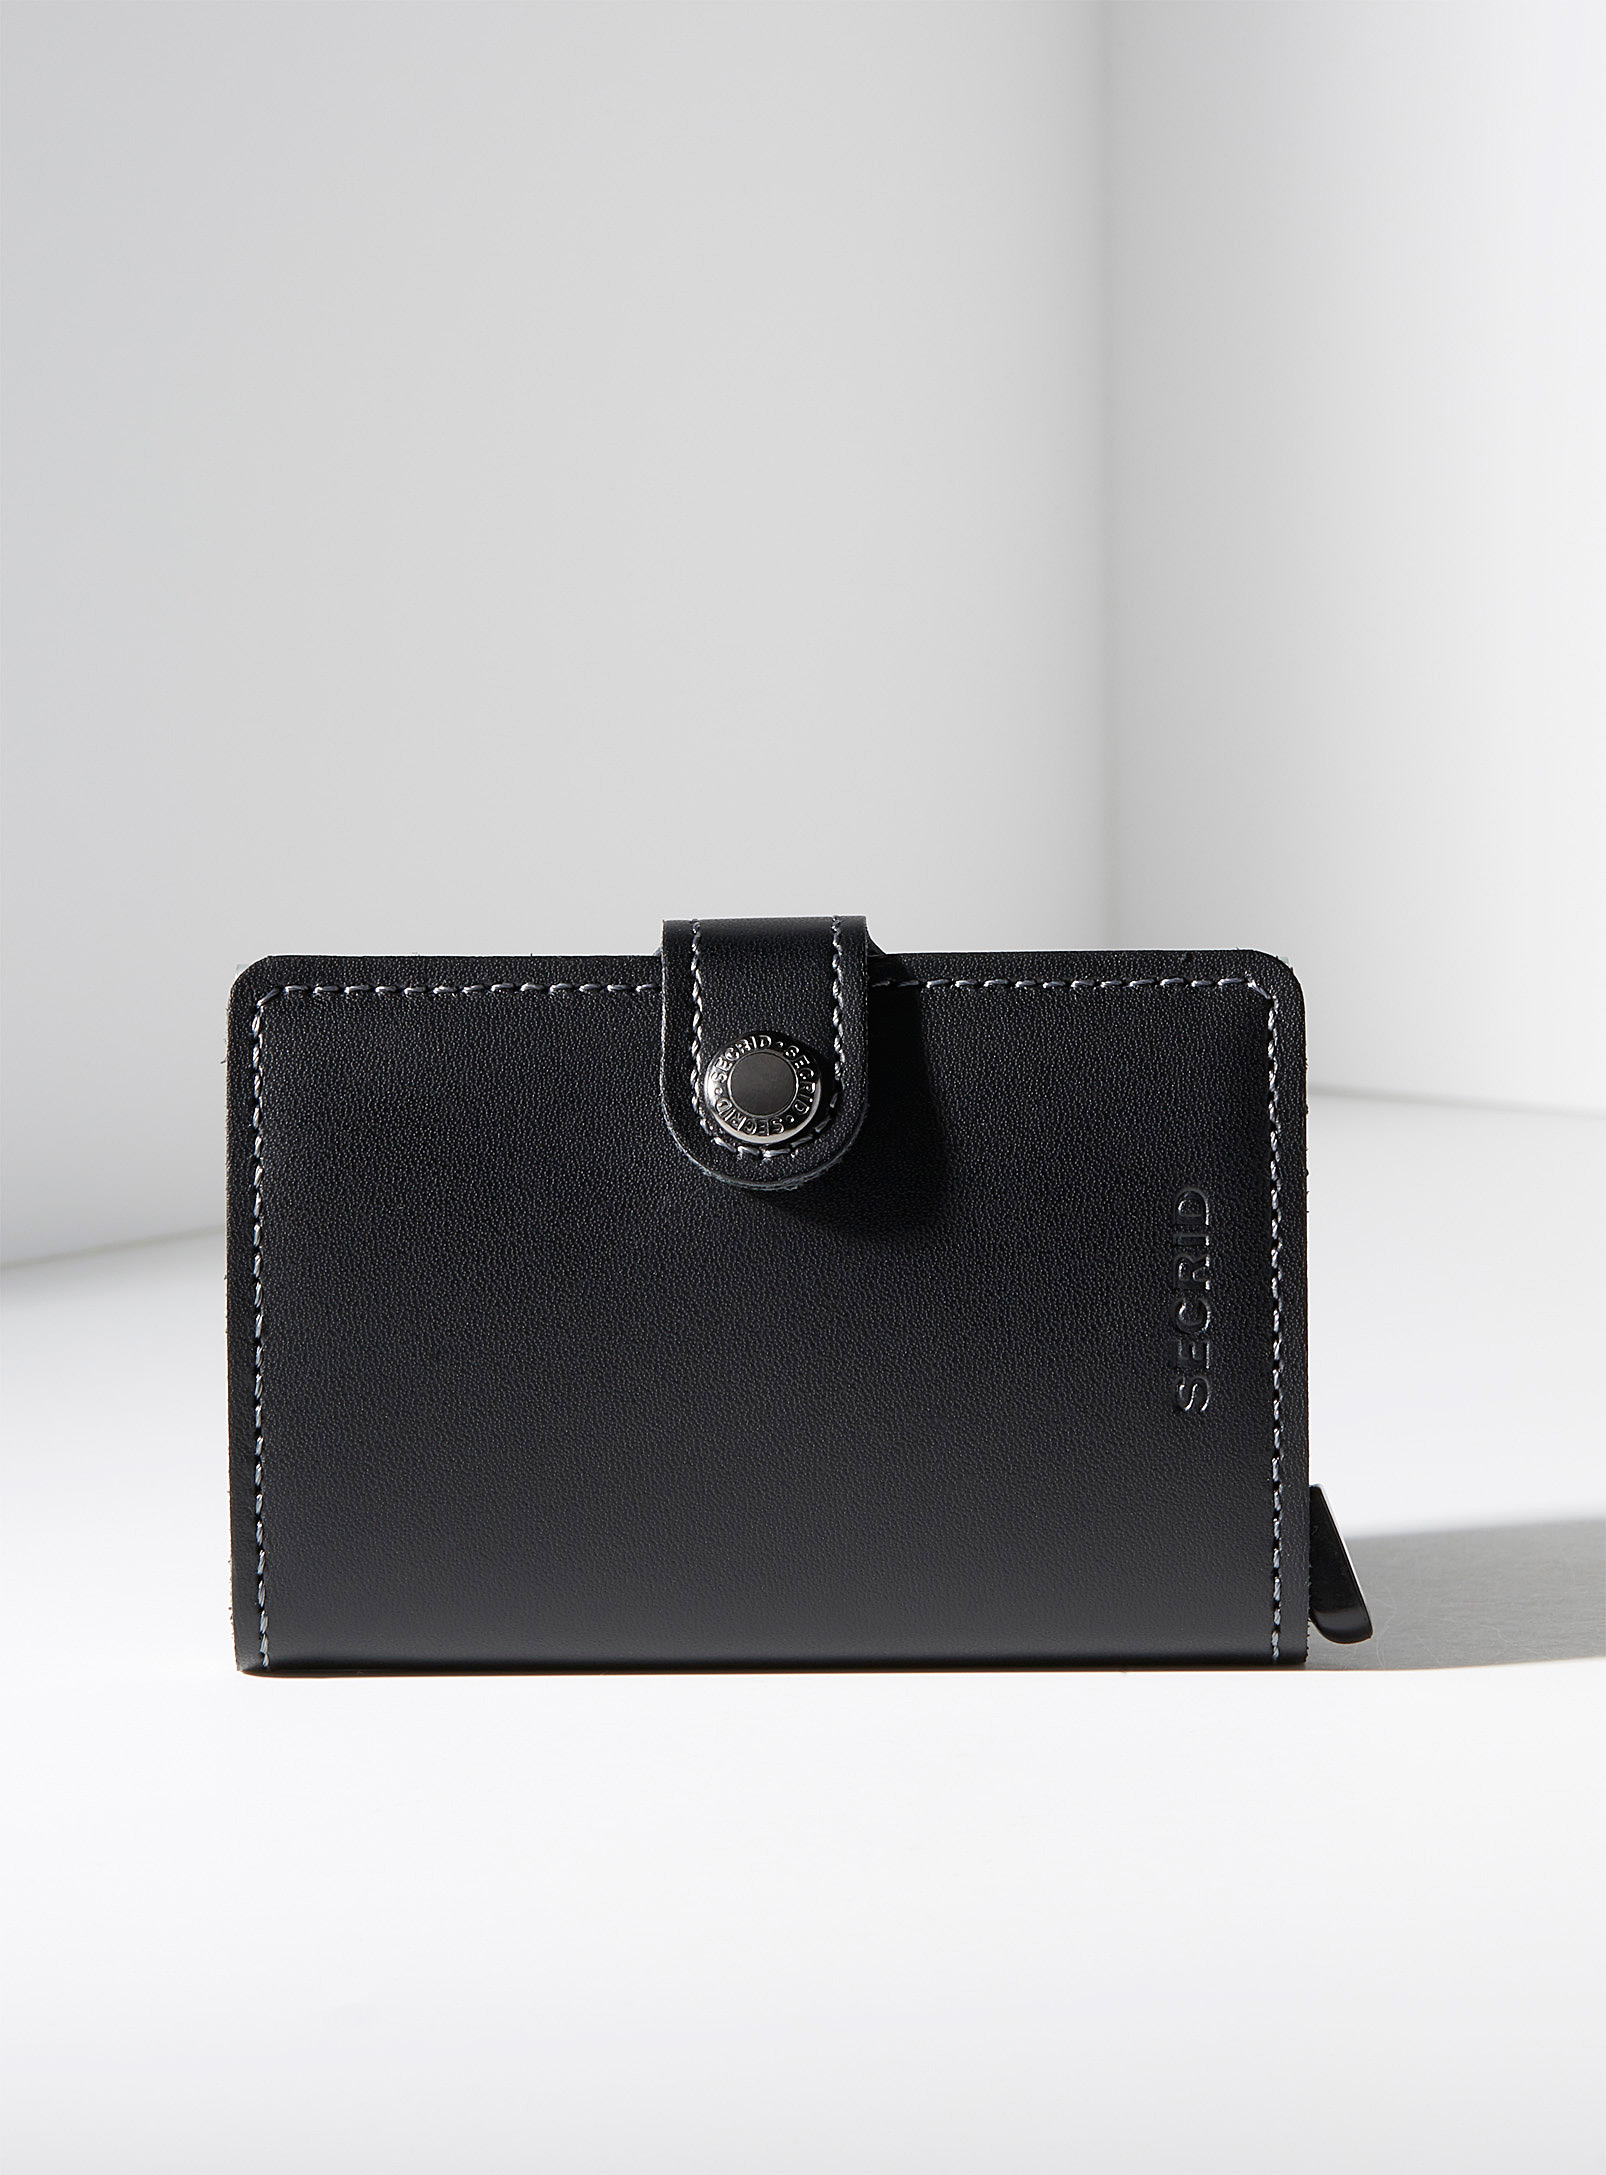 Secrid Original Smooth Leather Miniwallet In Black